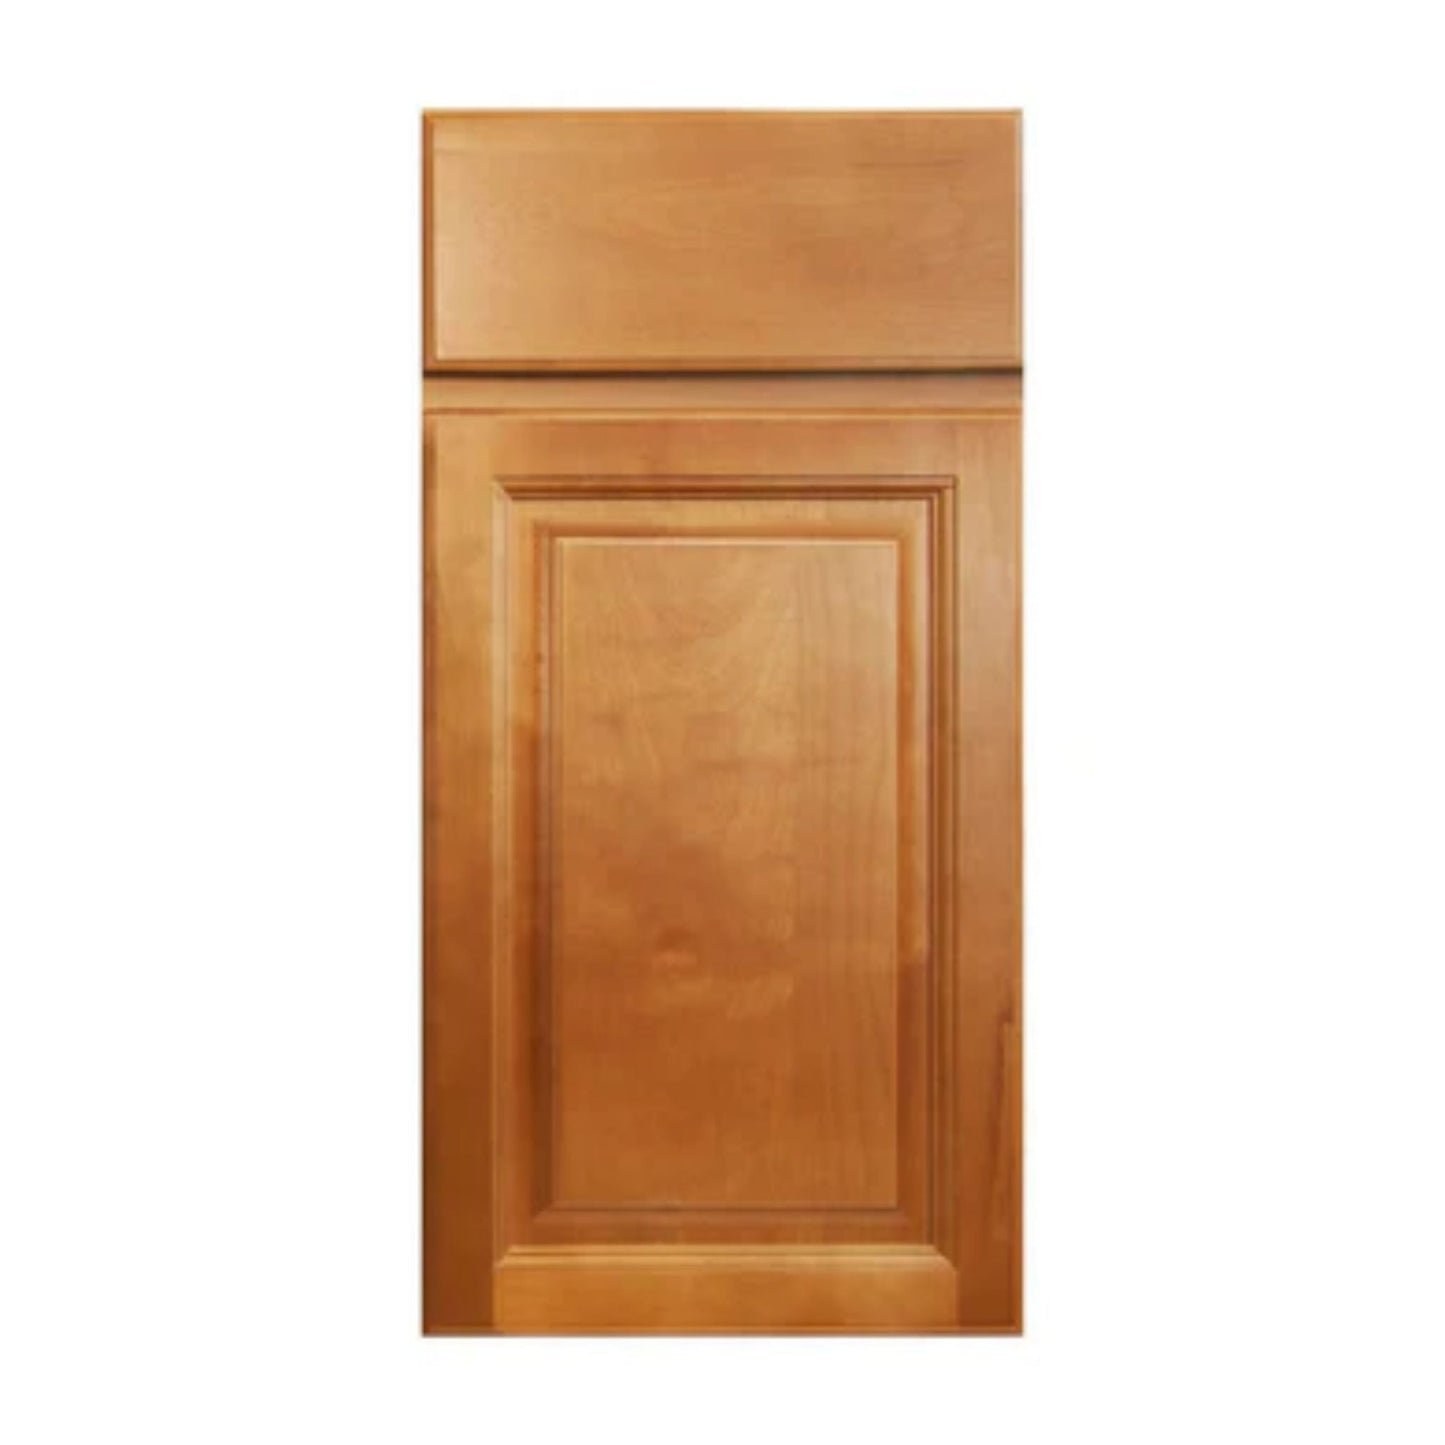 LessCare 33" x 36" x 12" Richmond Wall Kitchen Cabinet - W3336